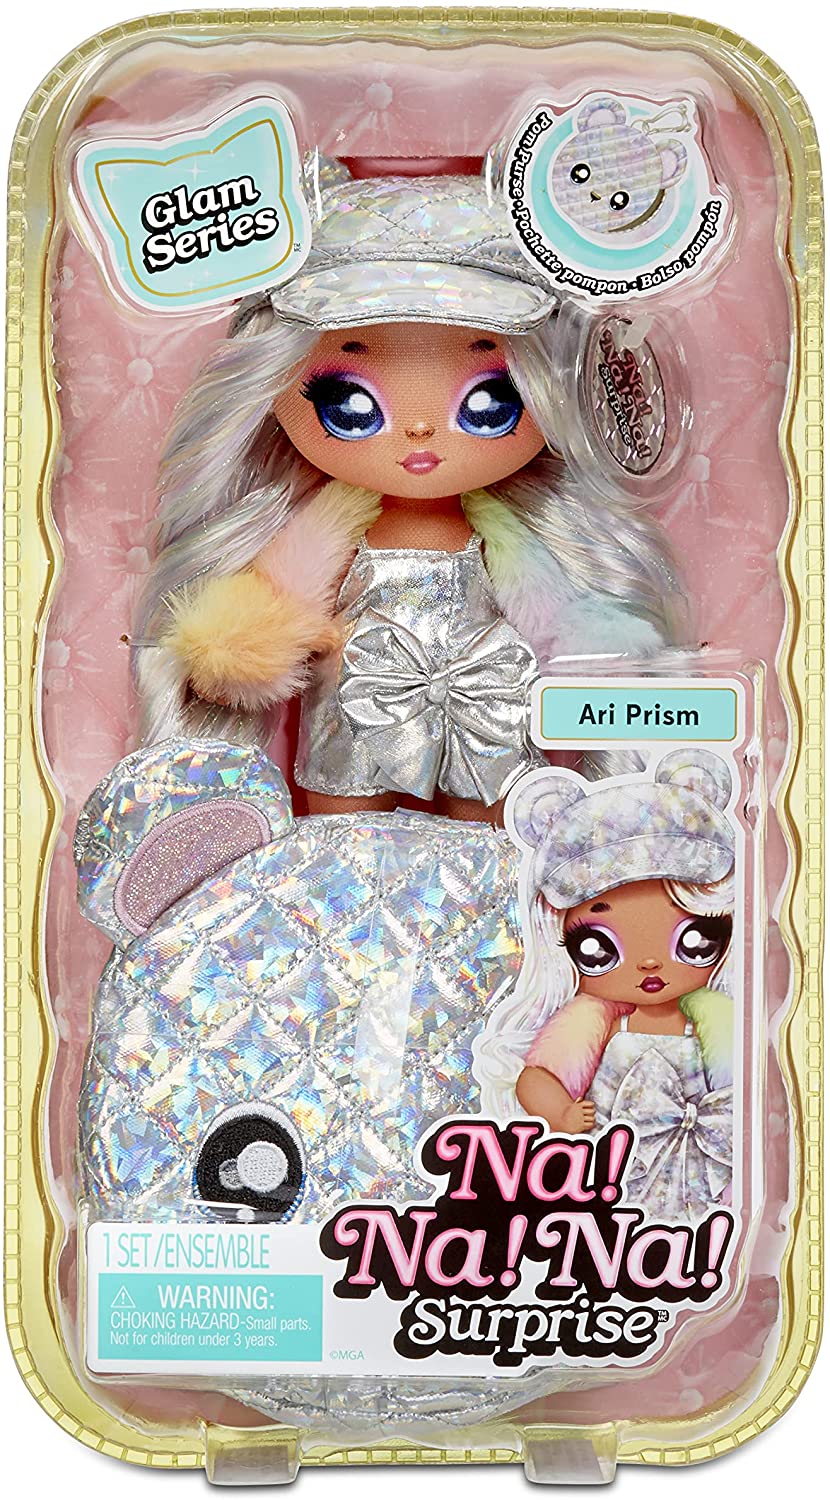 Na Na Na Surprise Glam Series doll Ari Prism